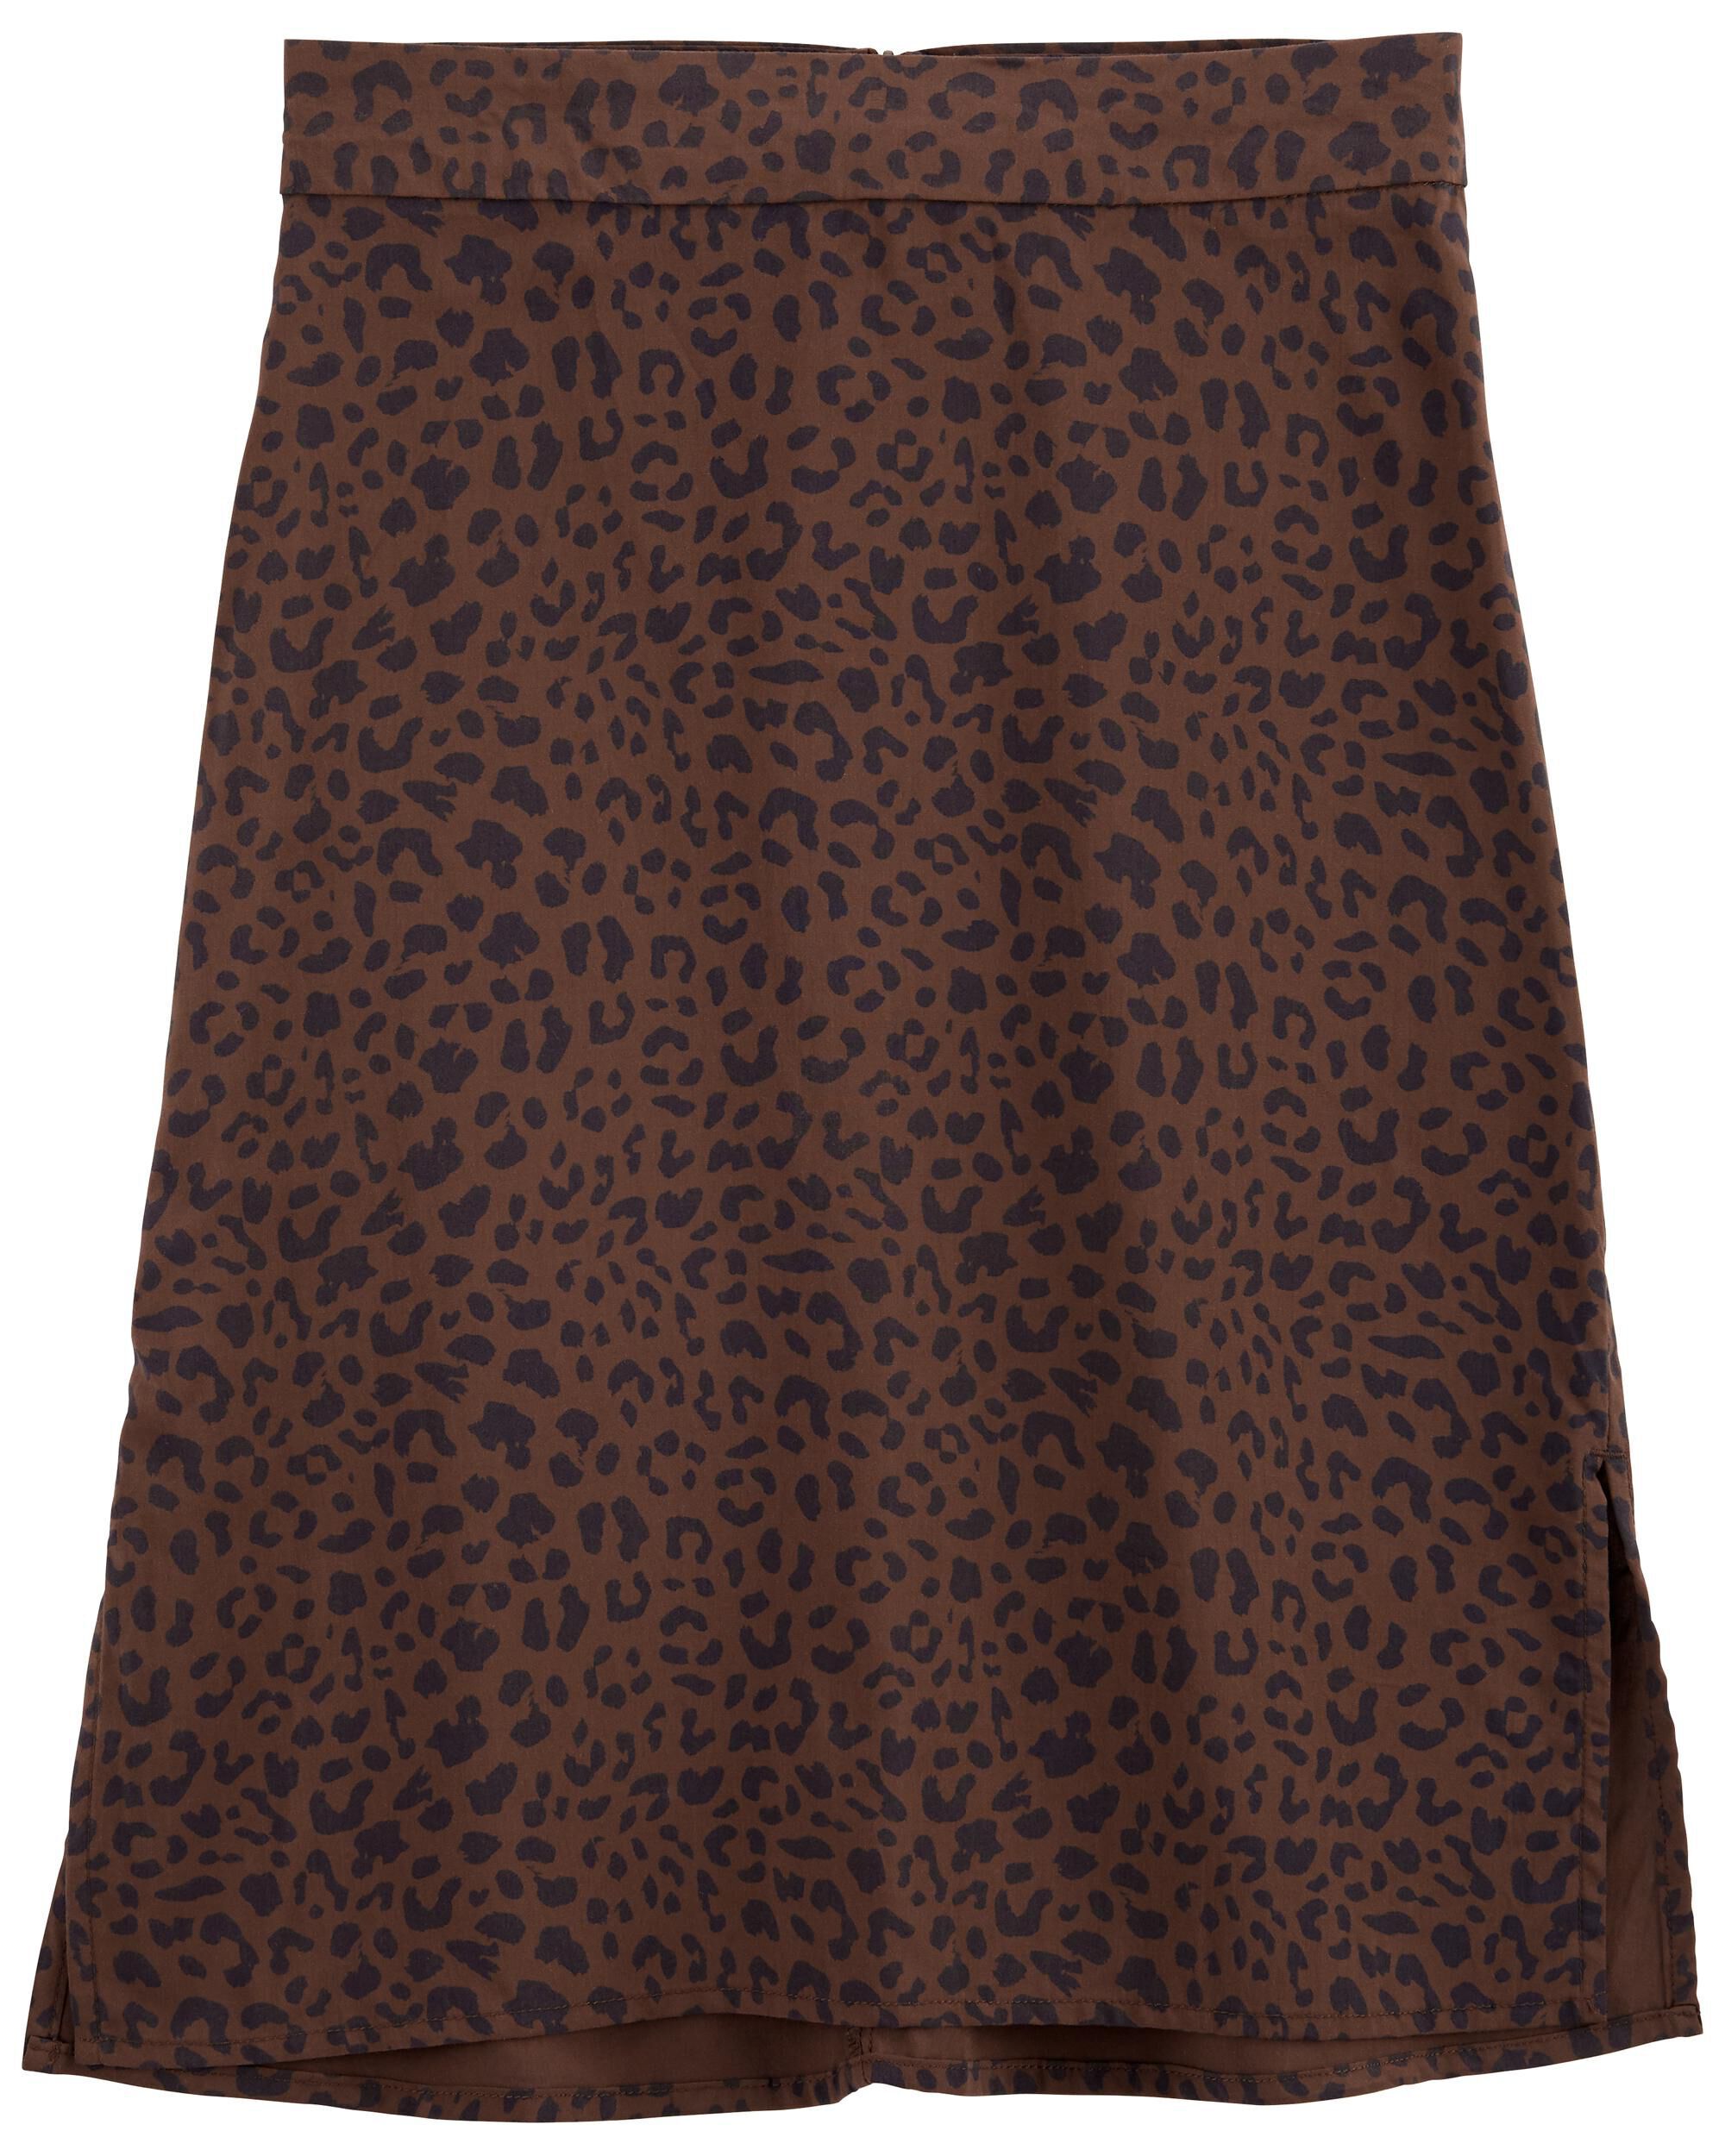 Carters Leopard Rayon Midi Skirt